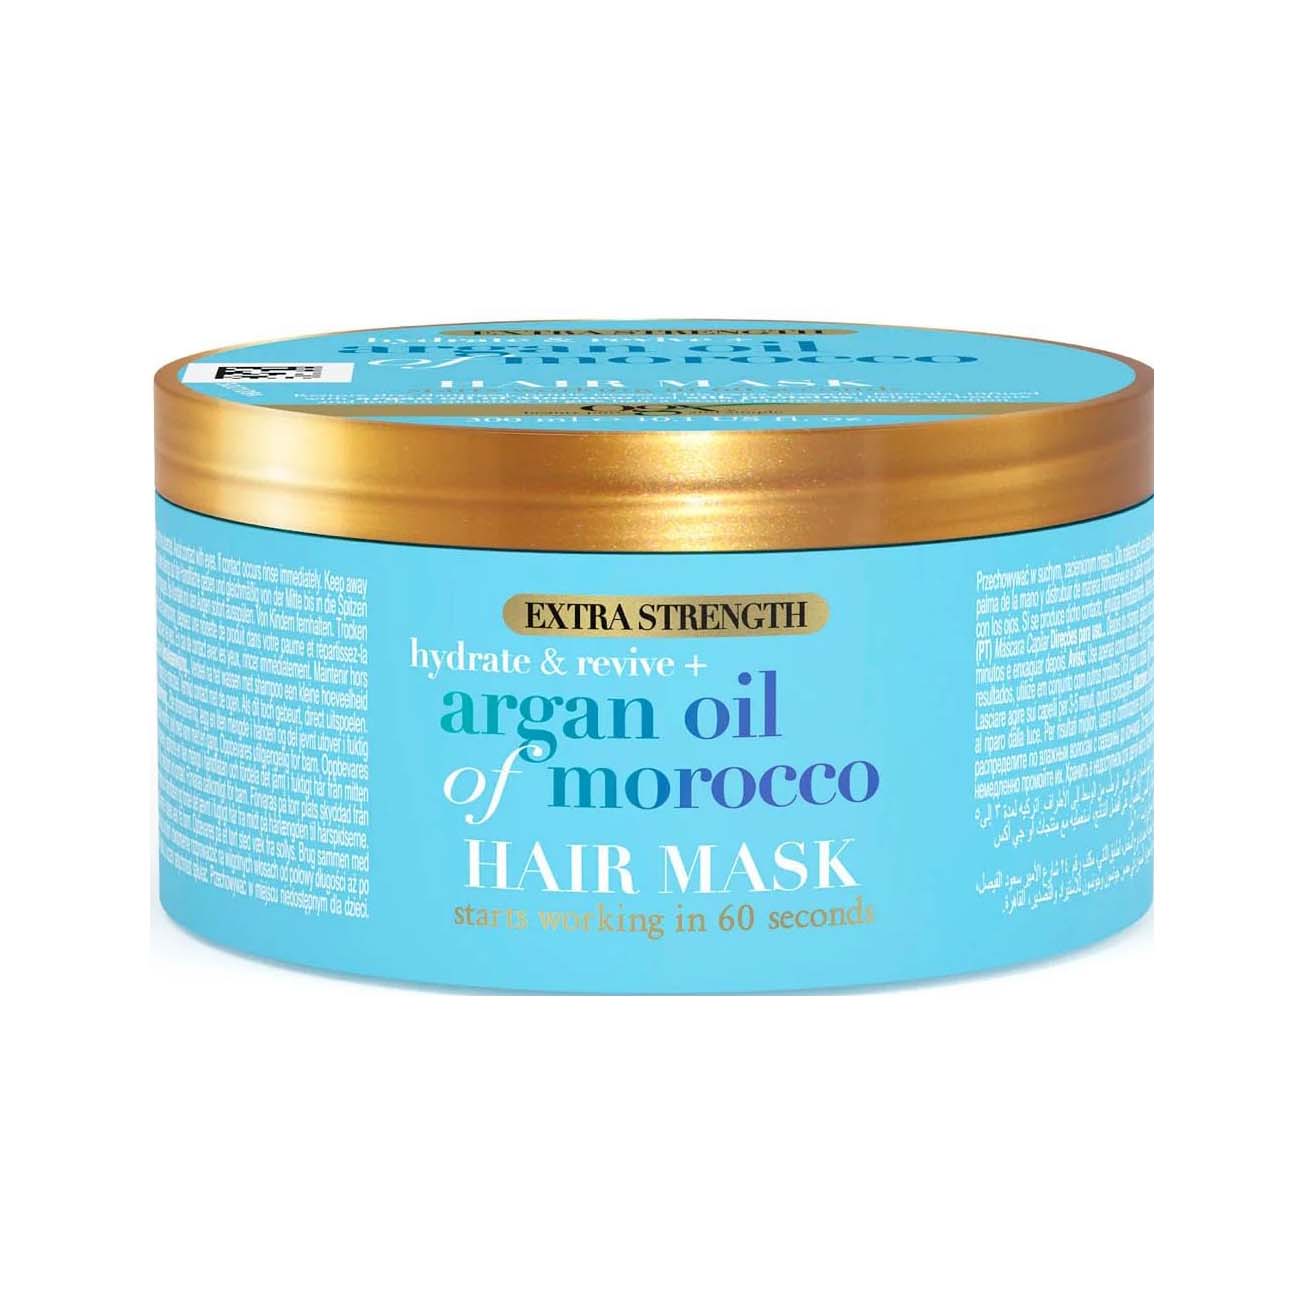 Ogx Argan Oil Of Morocco Hair Mask - 300ml - Bloom Pharmacy